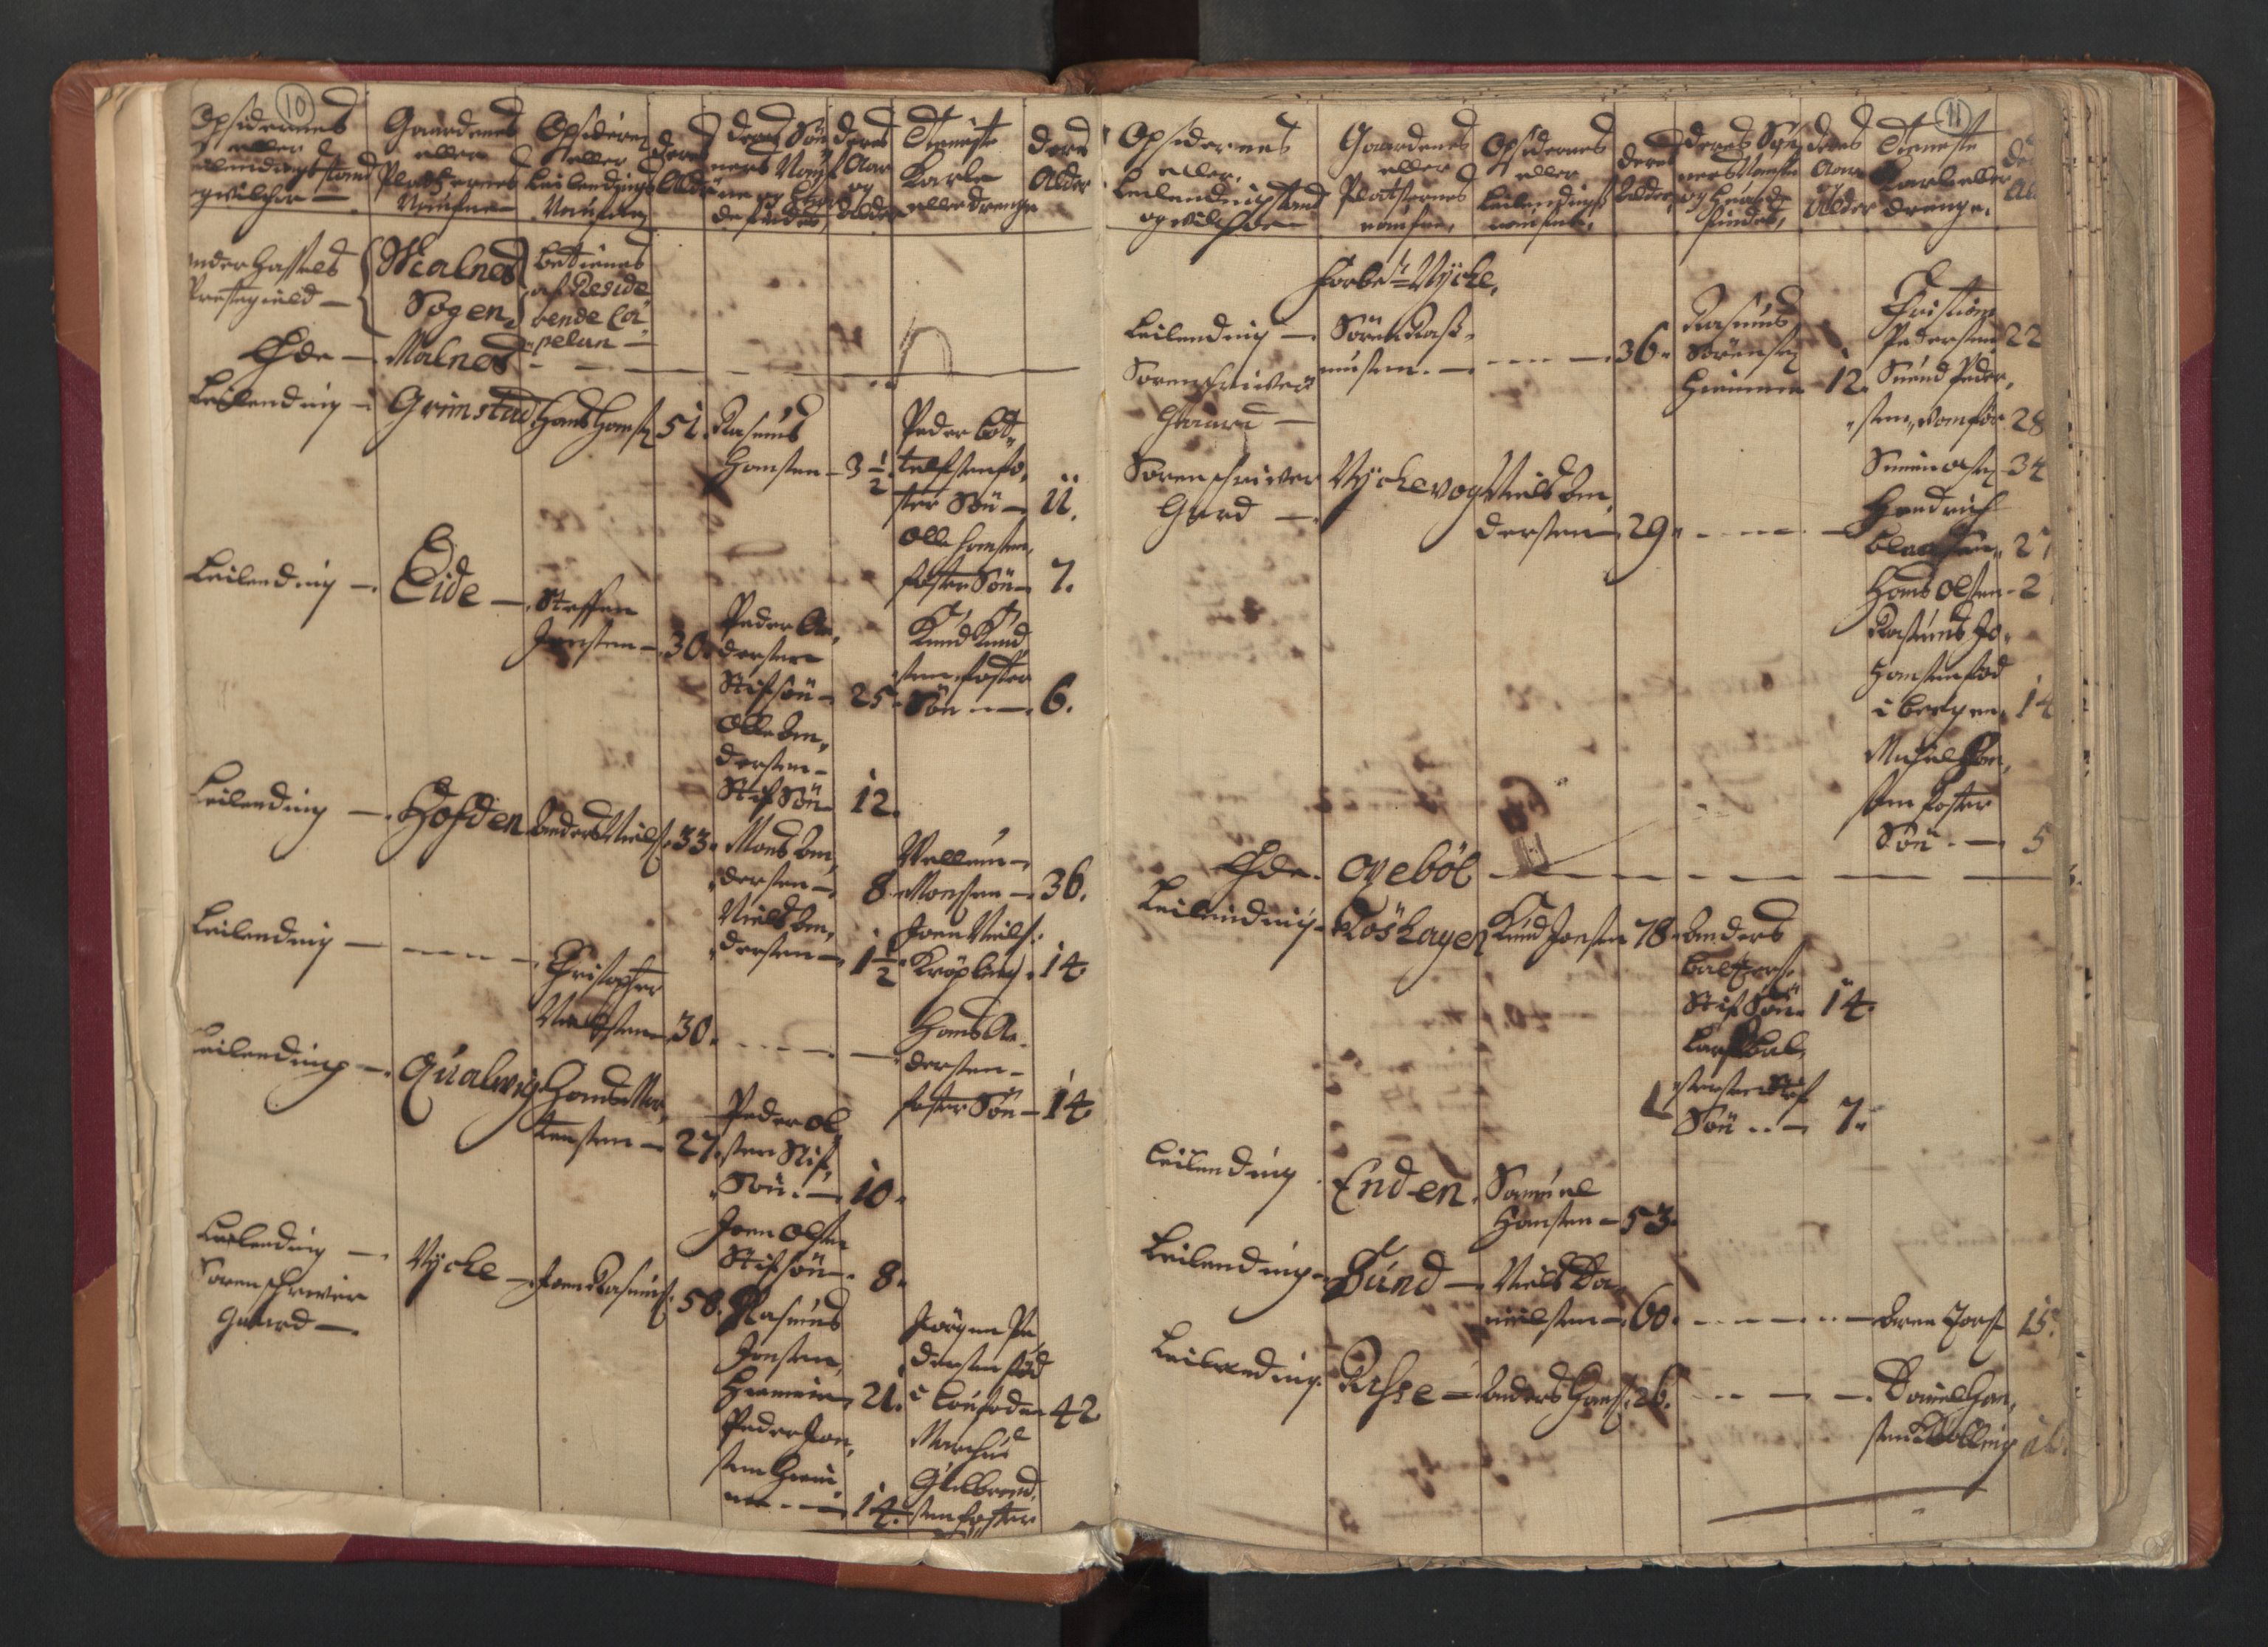 RA, Manntallet 1701, nr. 18: Vesterålen, Andenes og Lofoten fogderi, 1701, s. 10-11